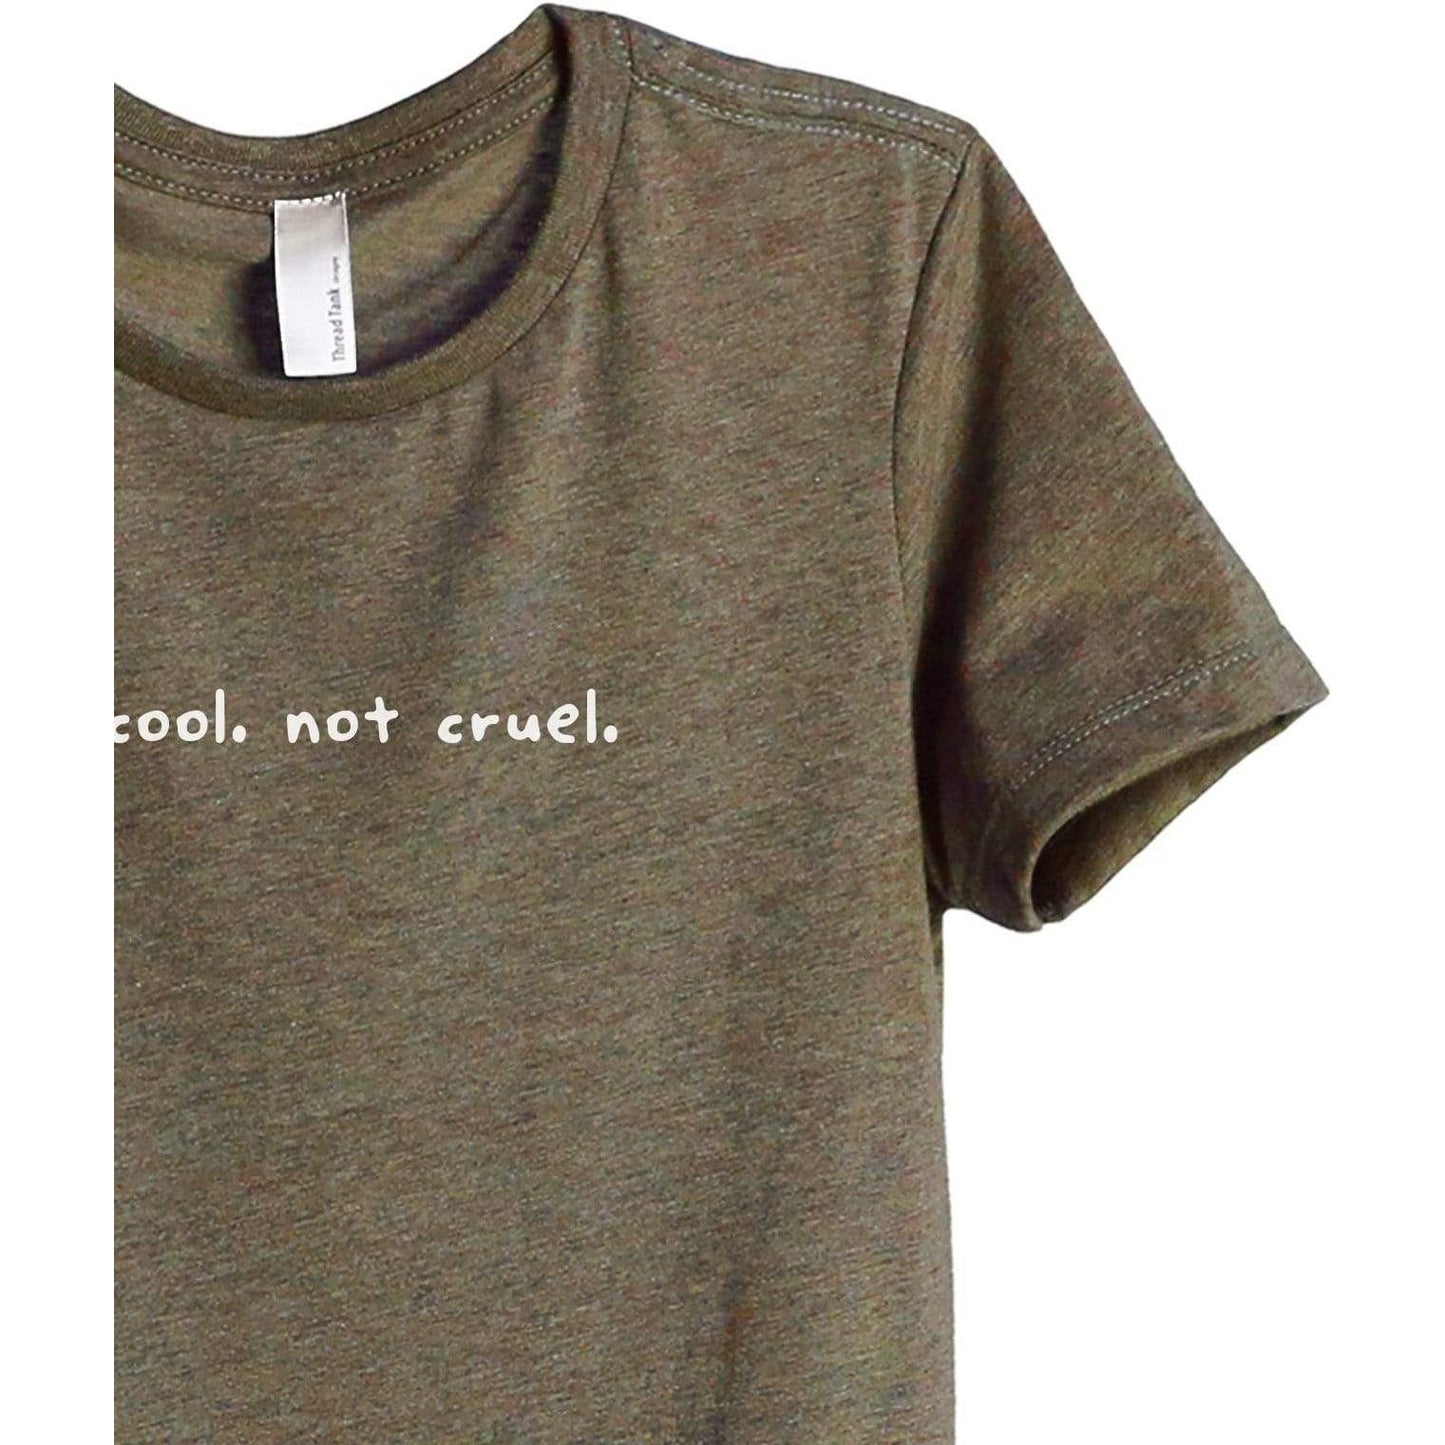 Be Cool Not Cruel